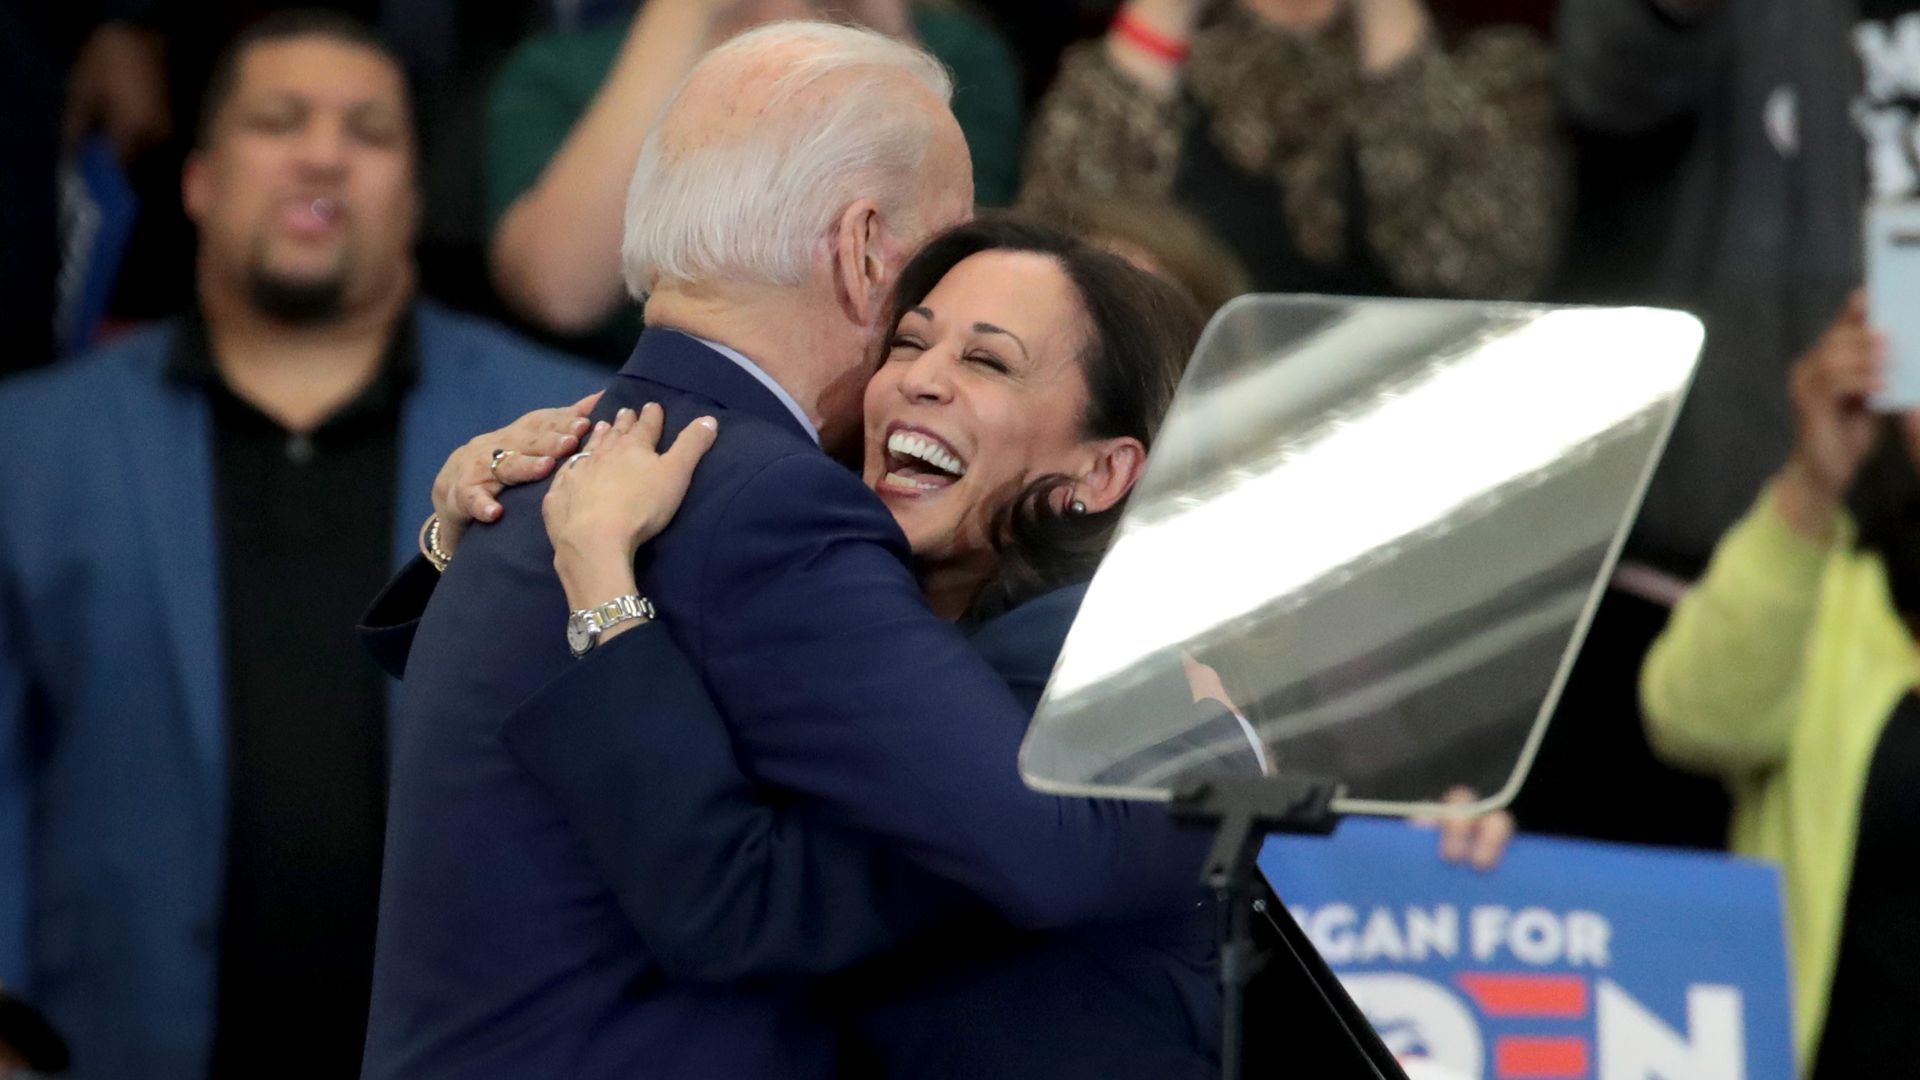 Joe Biden picks Kamala Harris: Democrats' campaign raises millions